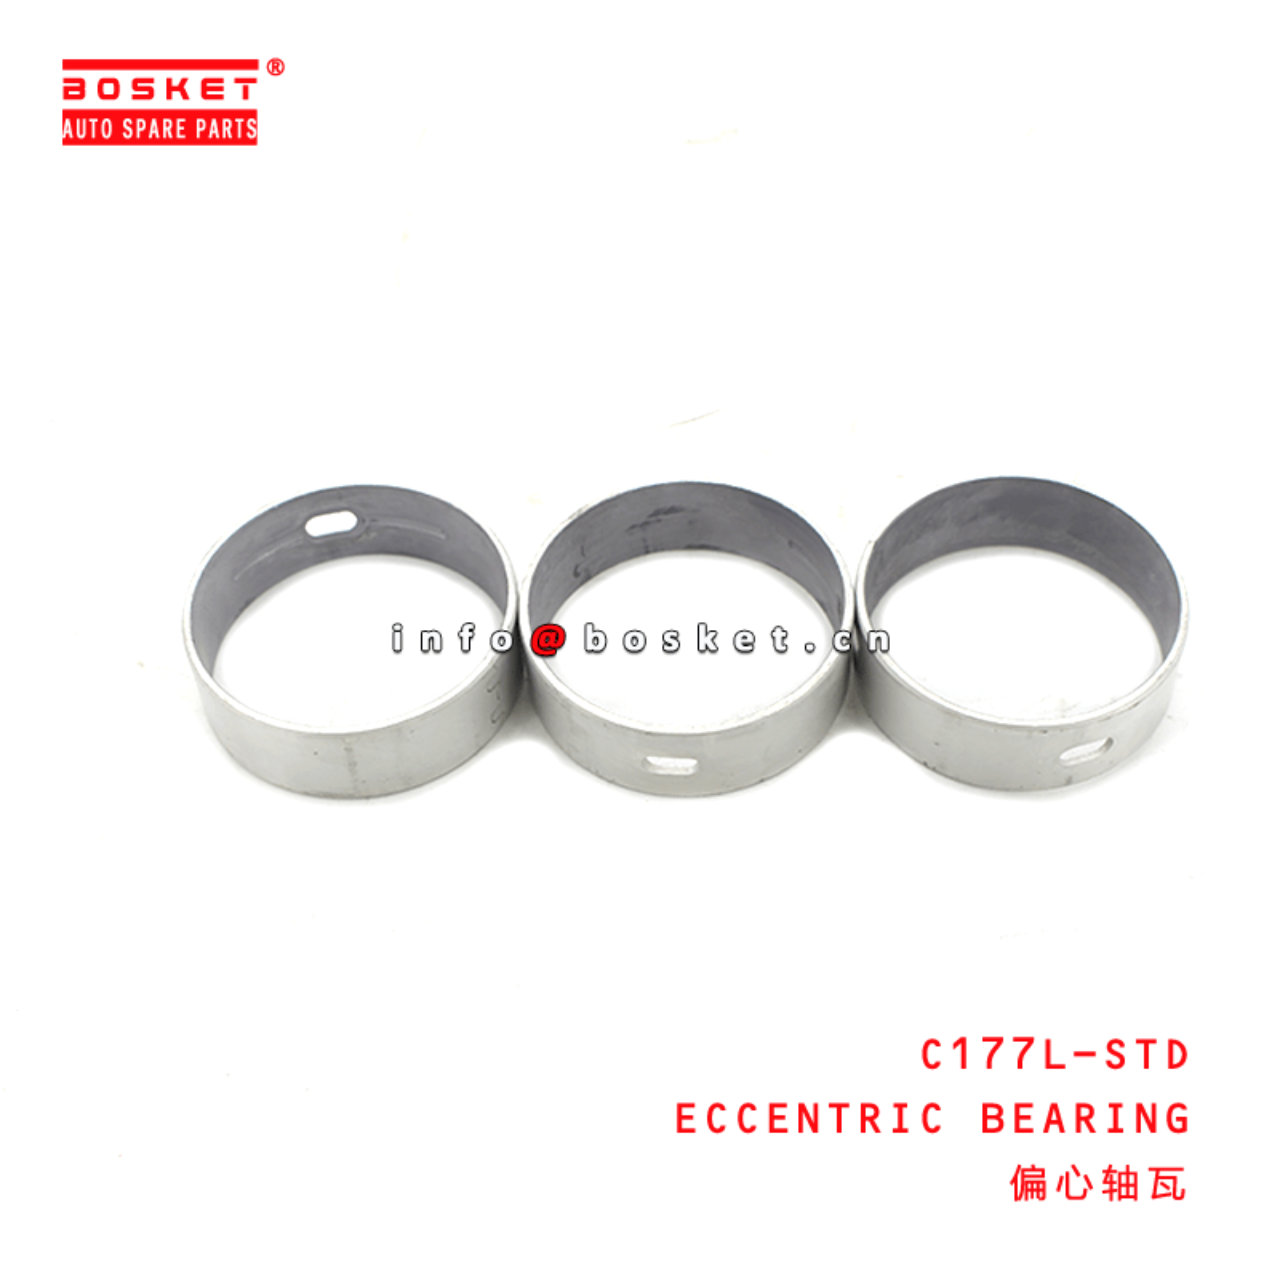 C177L-STD Eccentric Bearing Suitable for ISUZU 4BA1